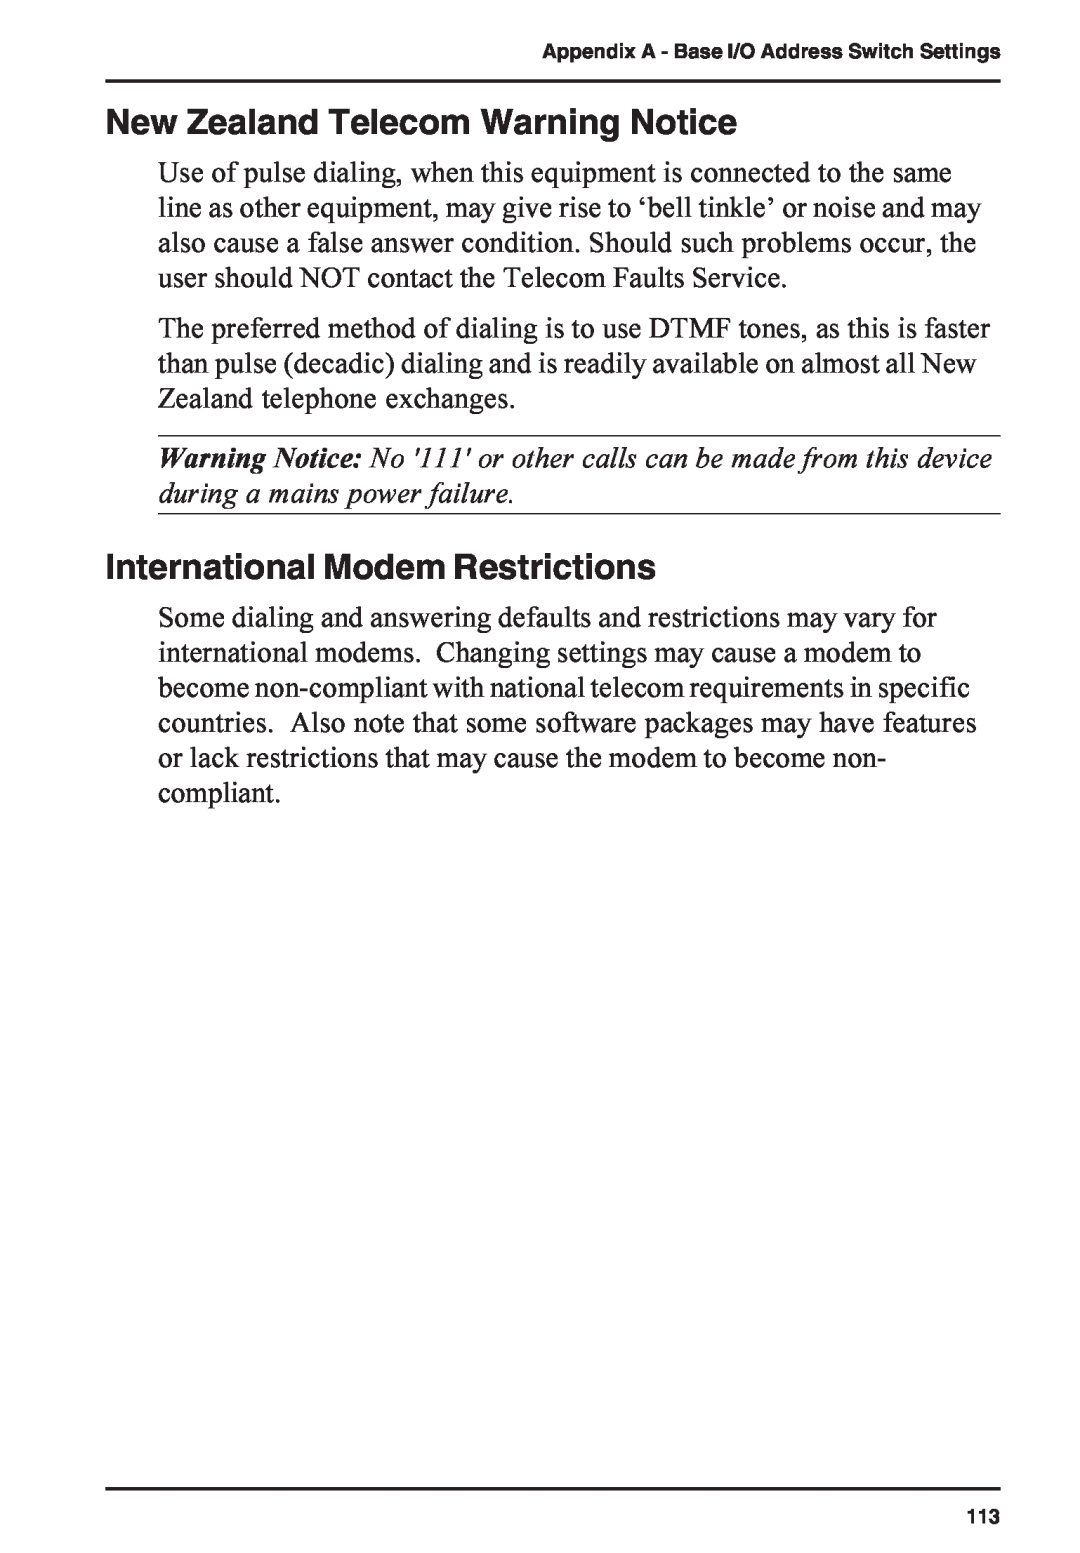 Multi-Tech Systems ISI5634PCI/4/8 manual New Zealand Telecom Warning Notice, International Modem Restrictions 